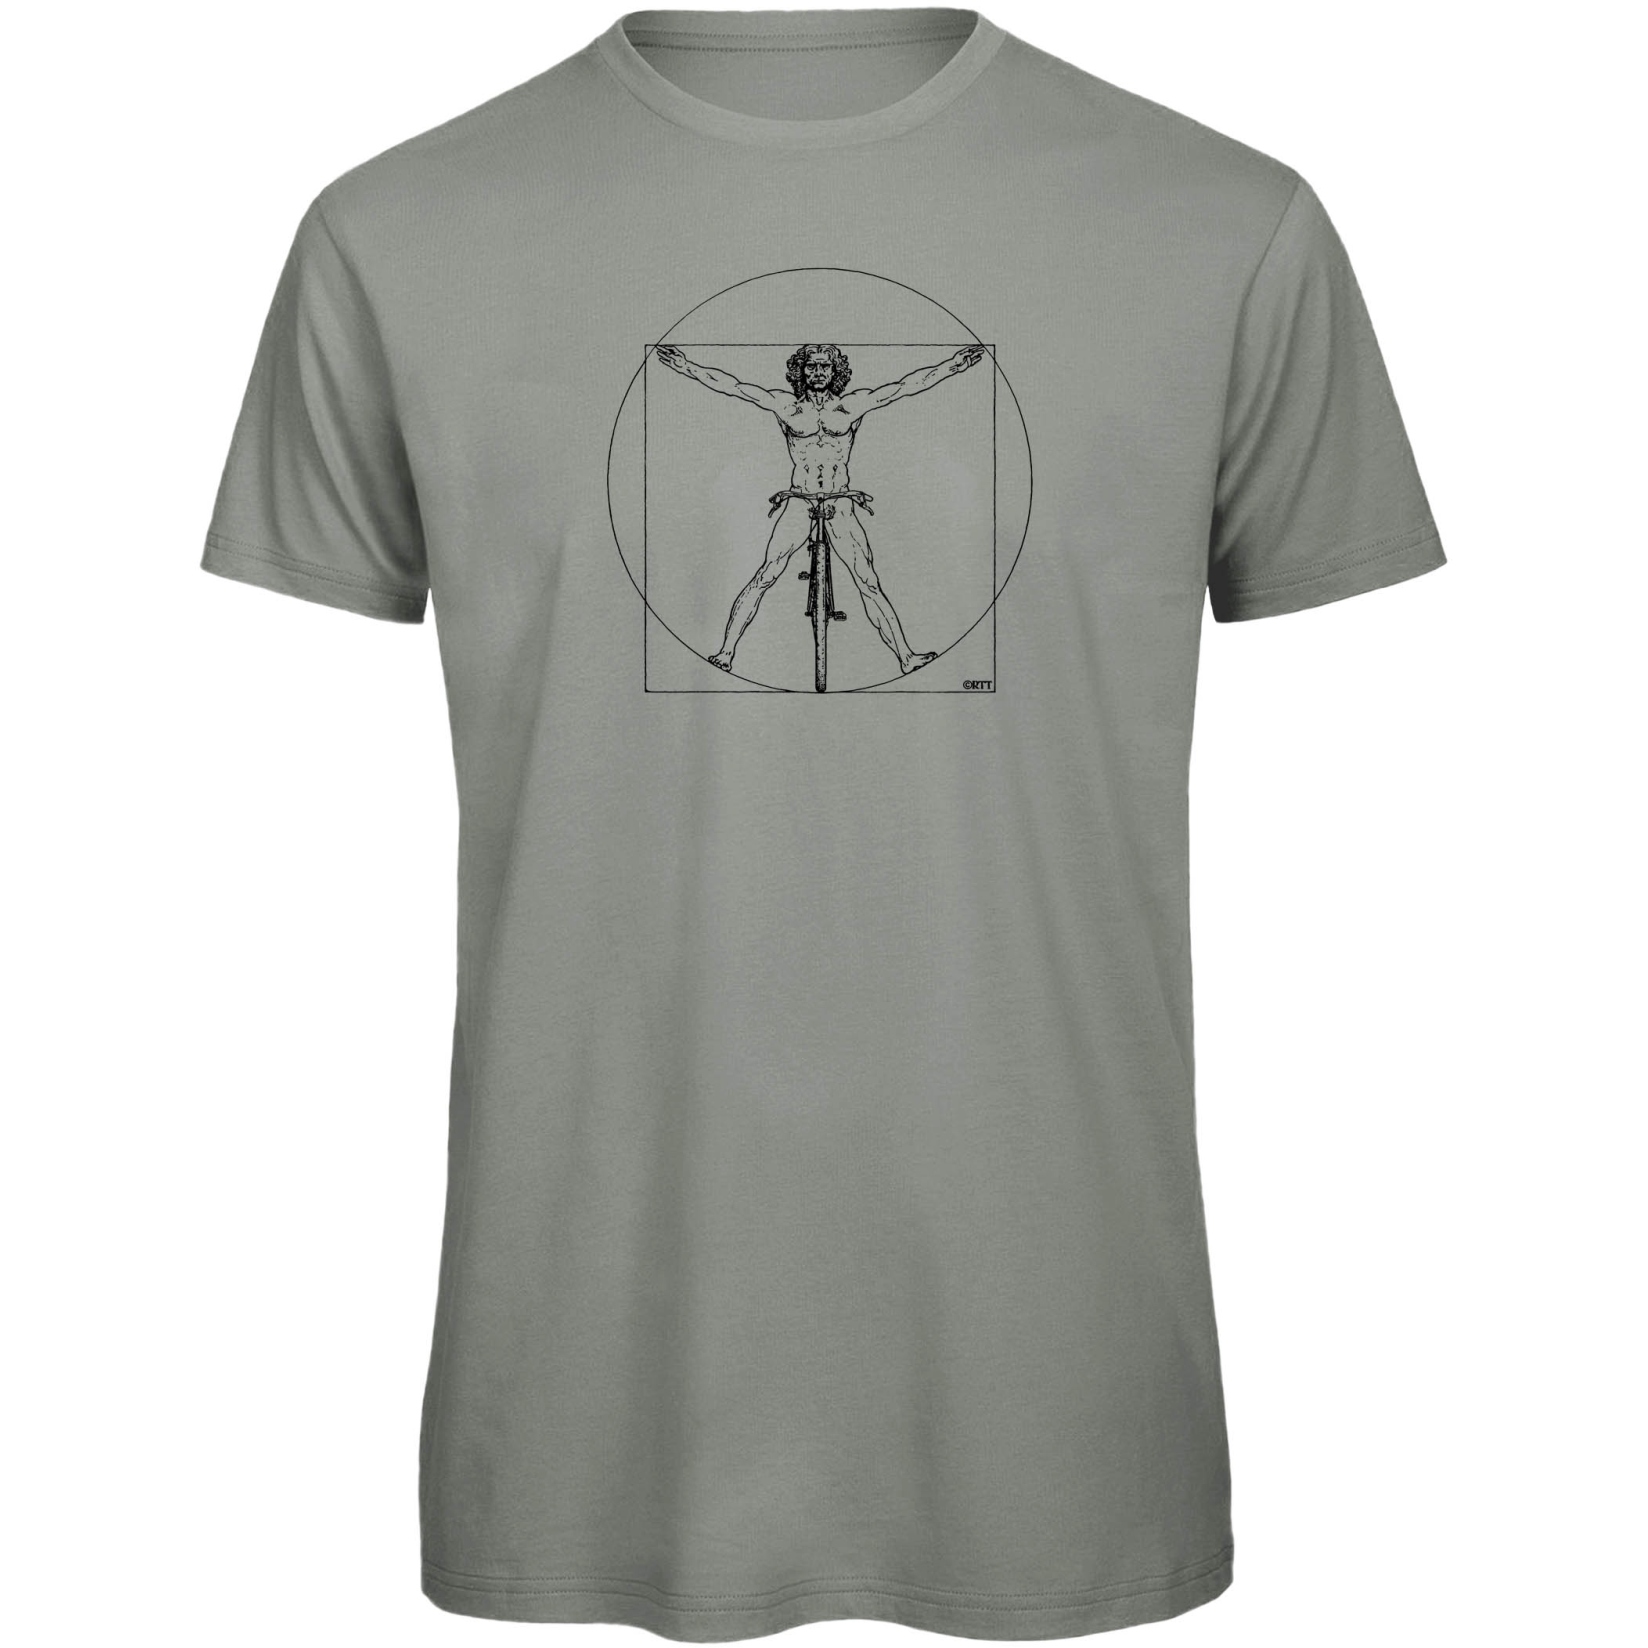 Imagen de RTTshirts Camiseta Bicicleta - DaVinci - gris claro